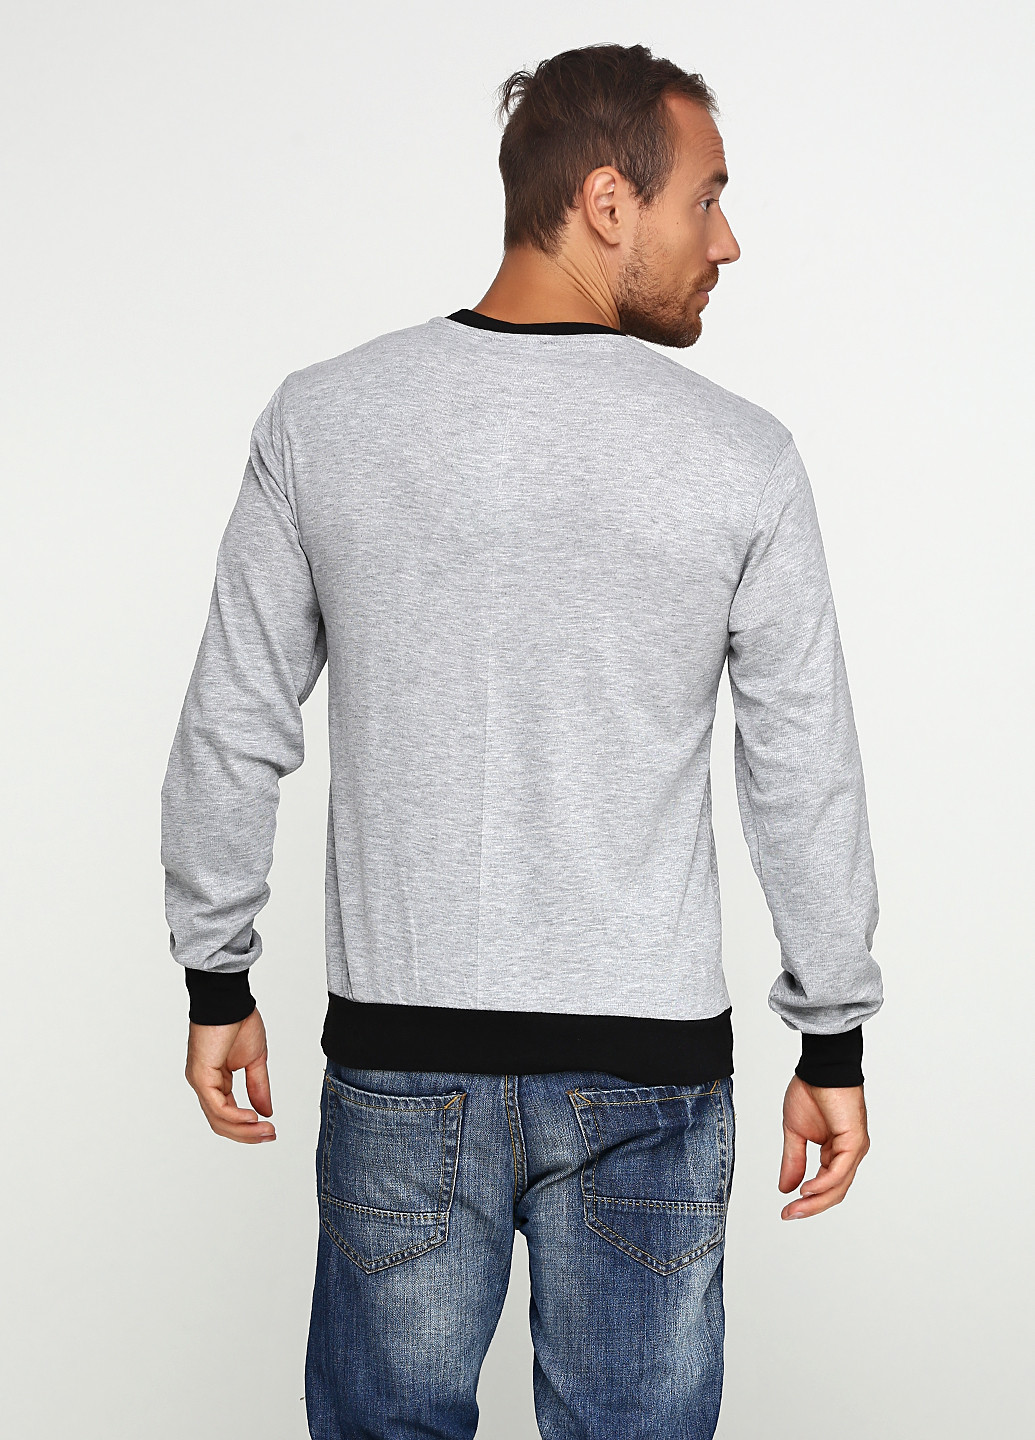 Светло-серый демисезонный пуловер пуловер MSY